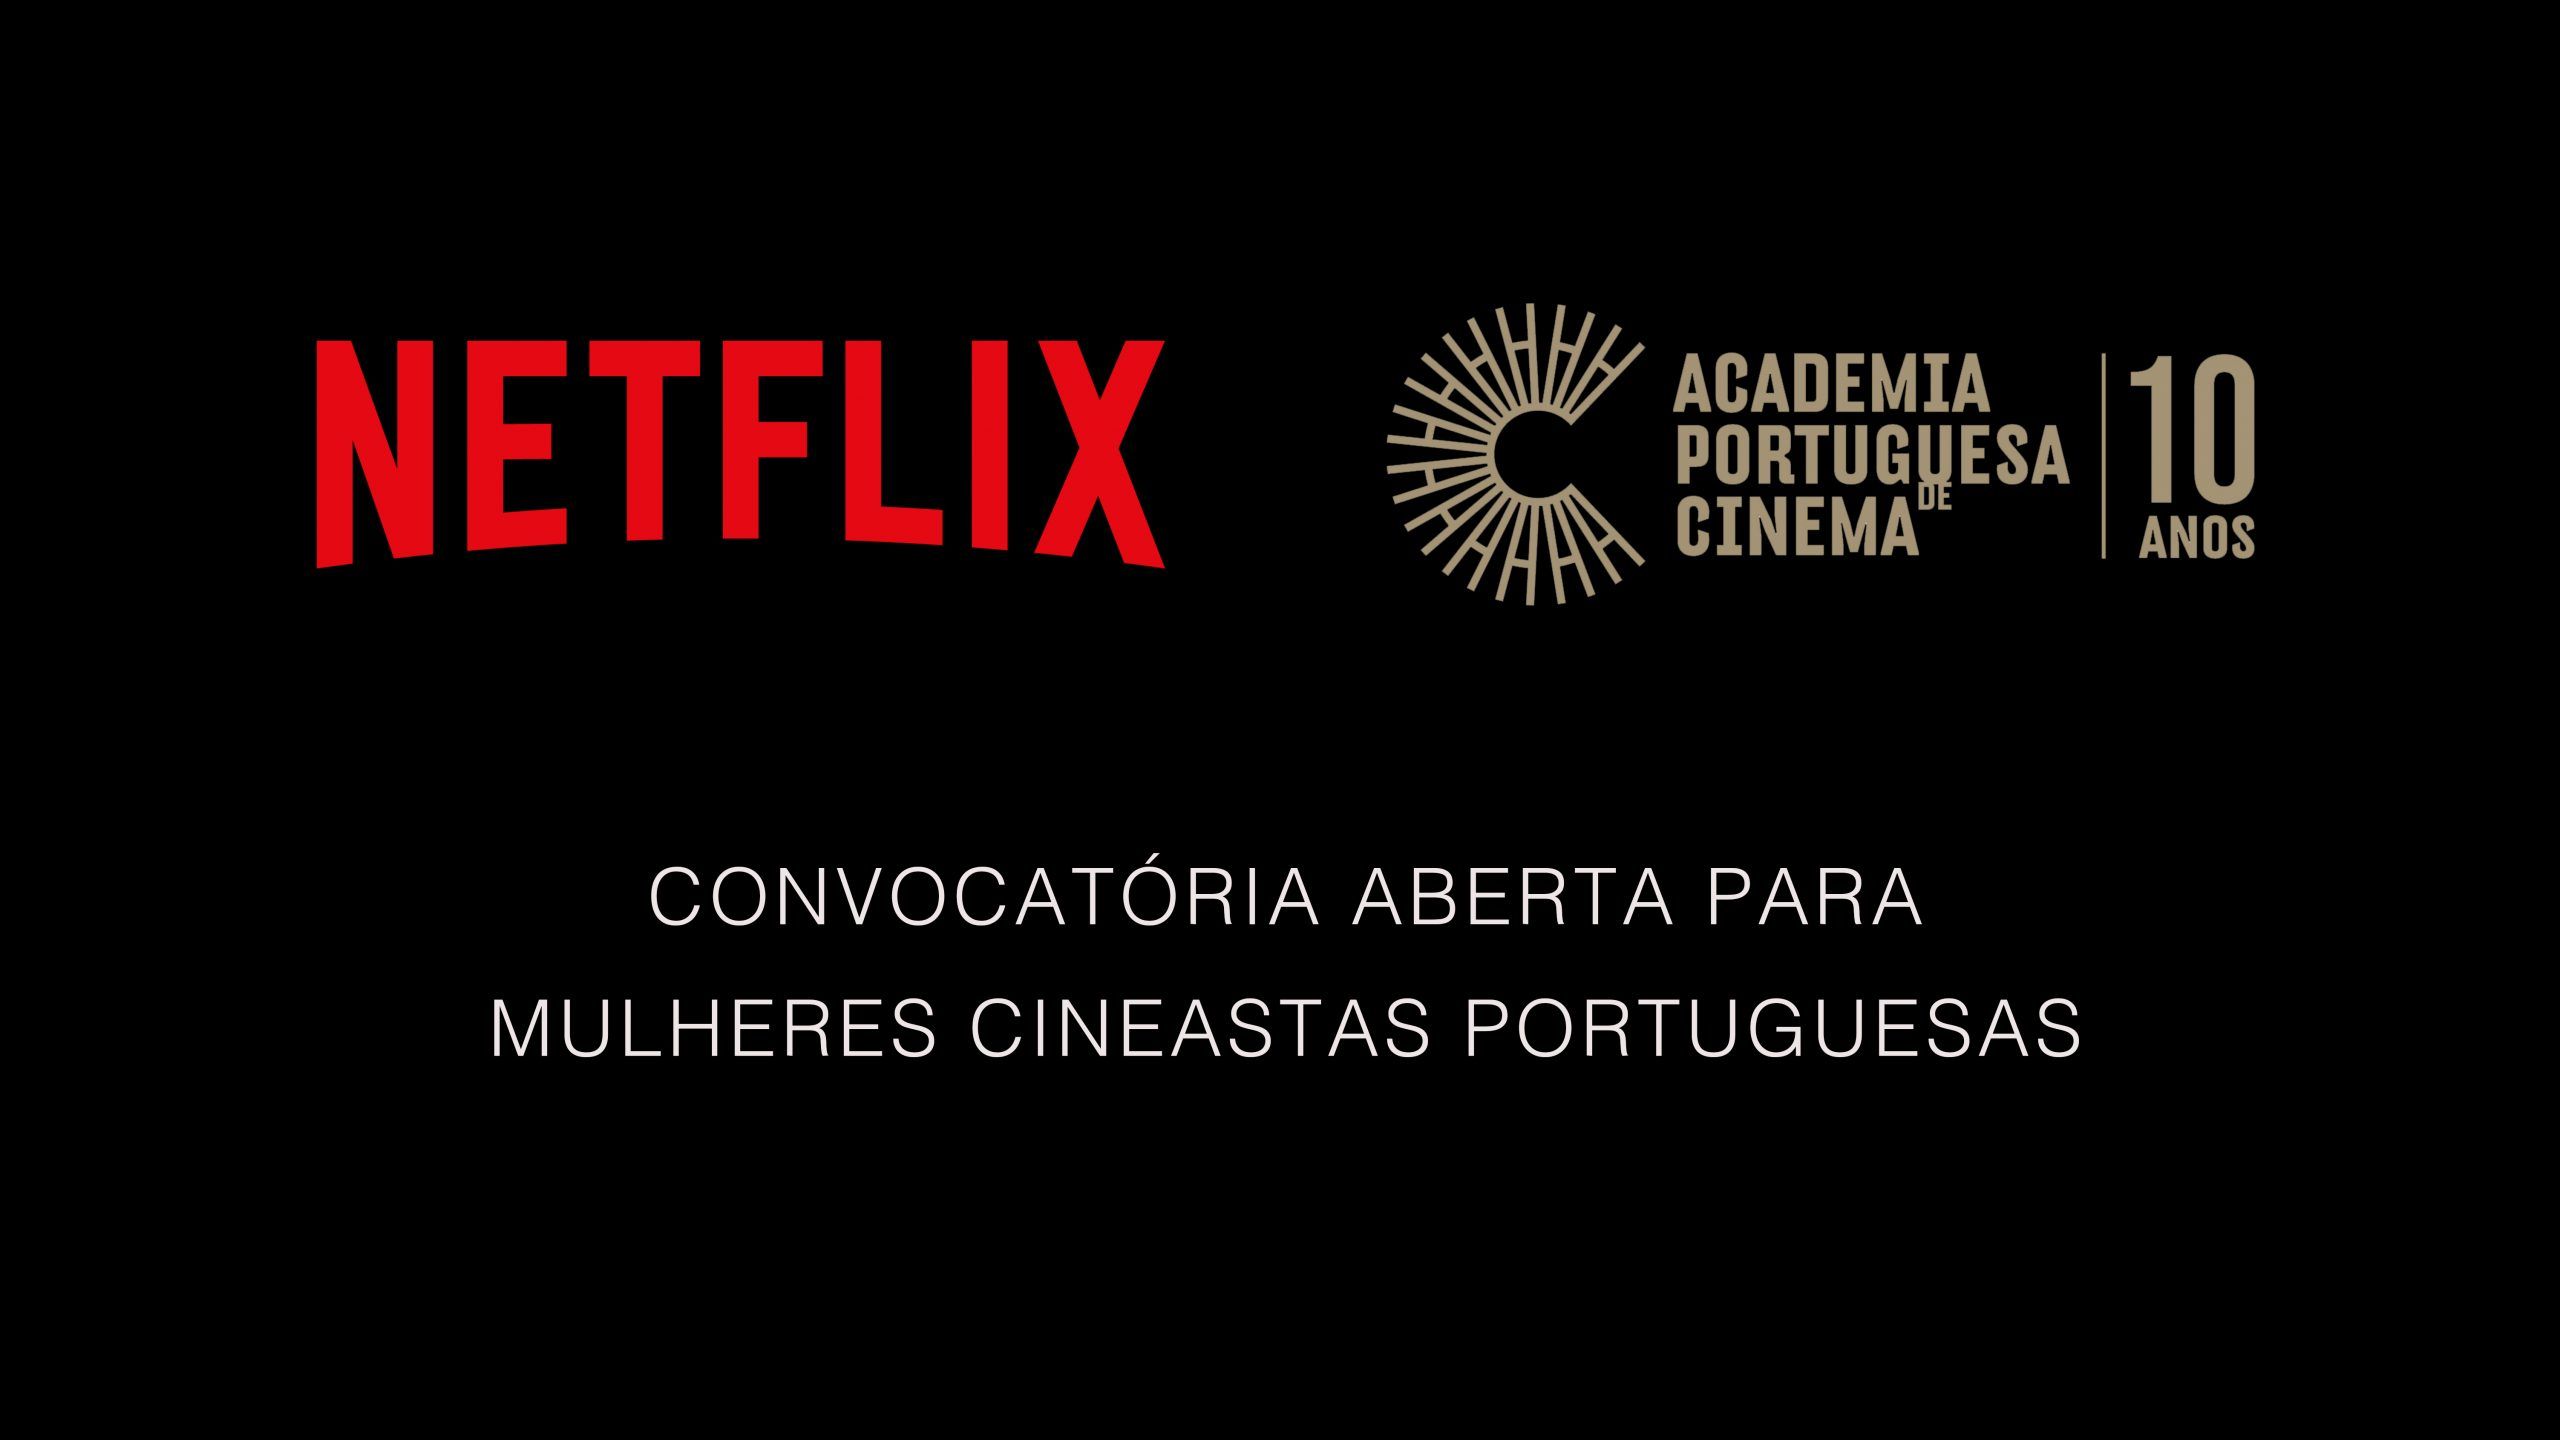 netflix-academia-portuguesa-cinema-1